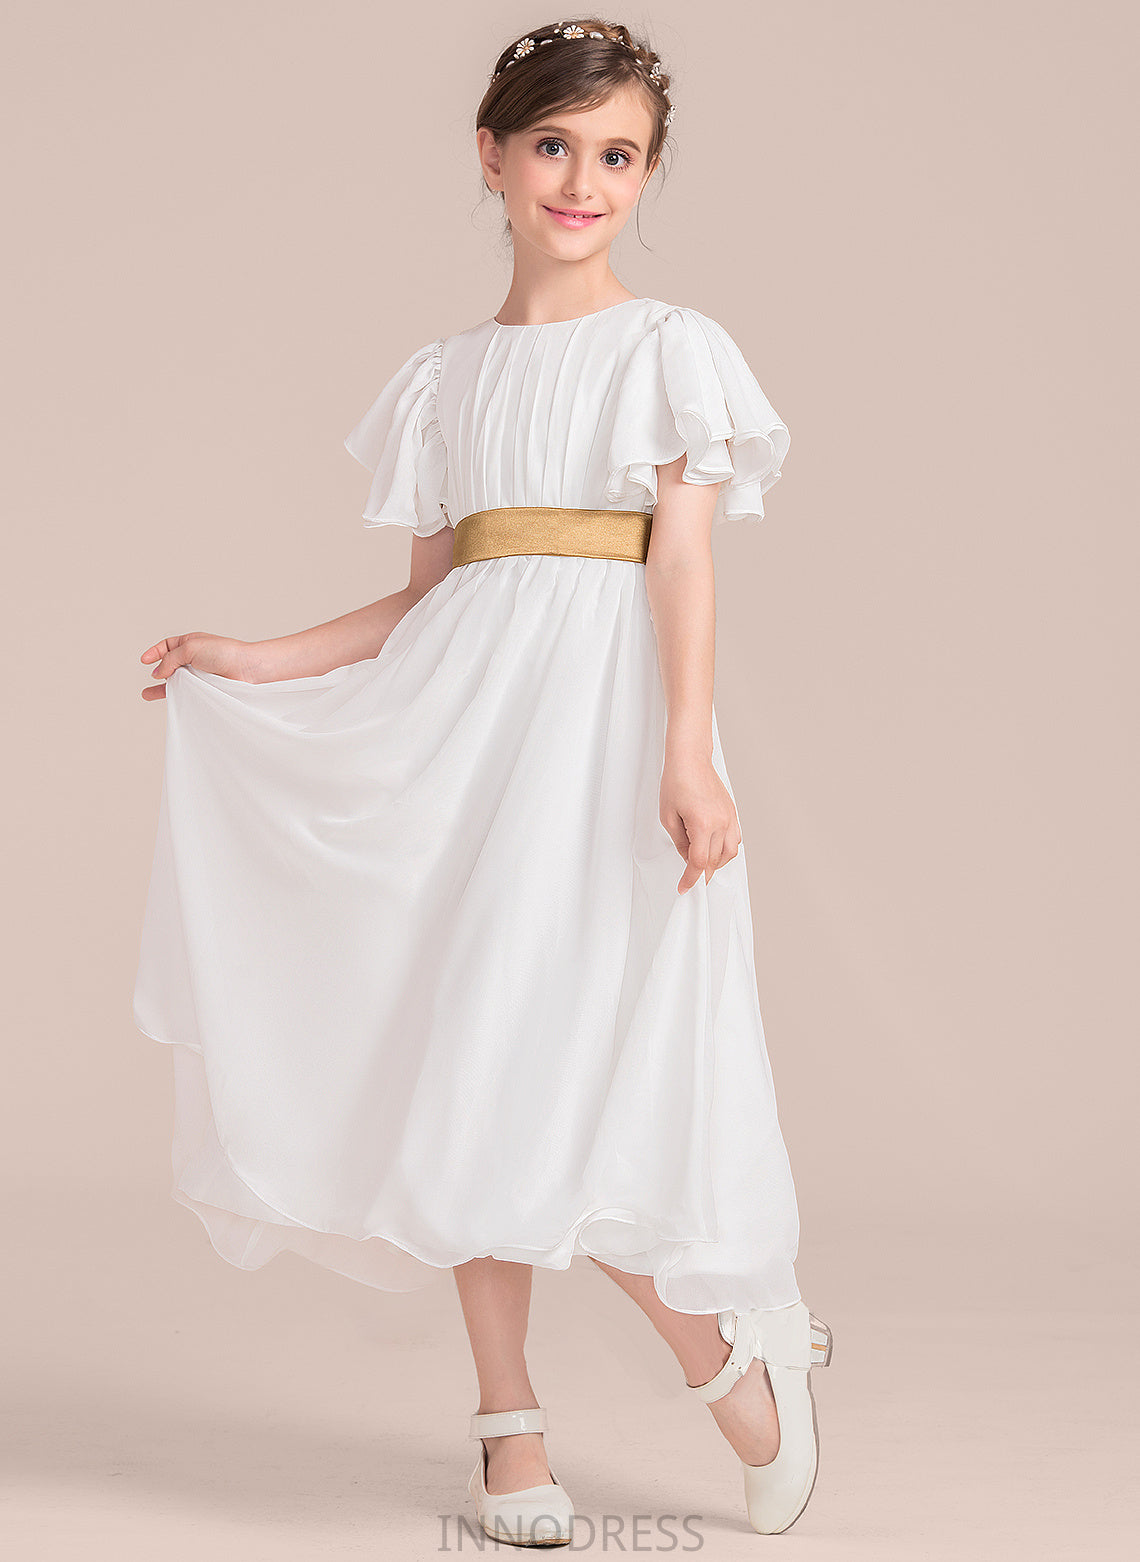 Amber Scoop Junior Bridesmaid Dresses Sash With A-Line Neck Chiffon Ruffle Tea-Length